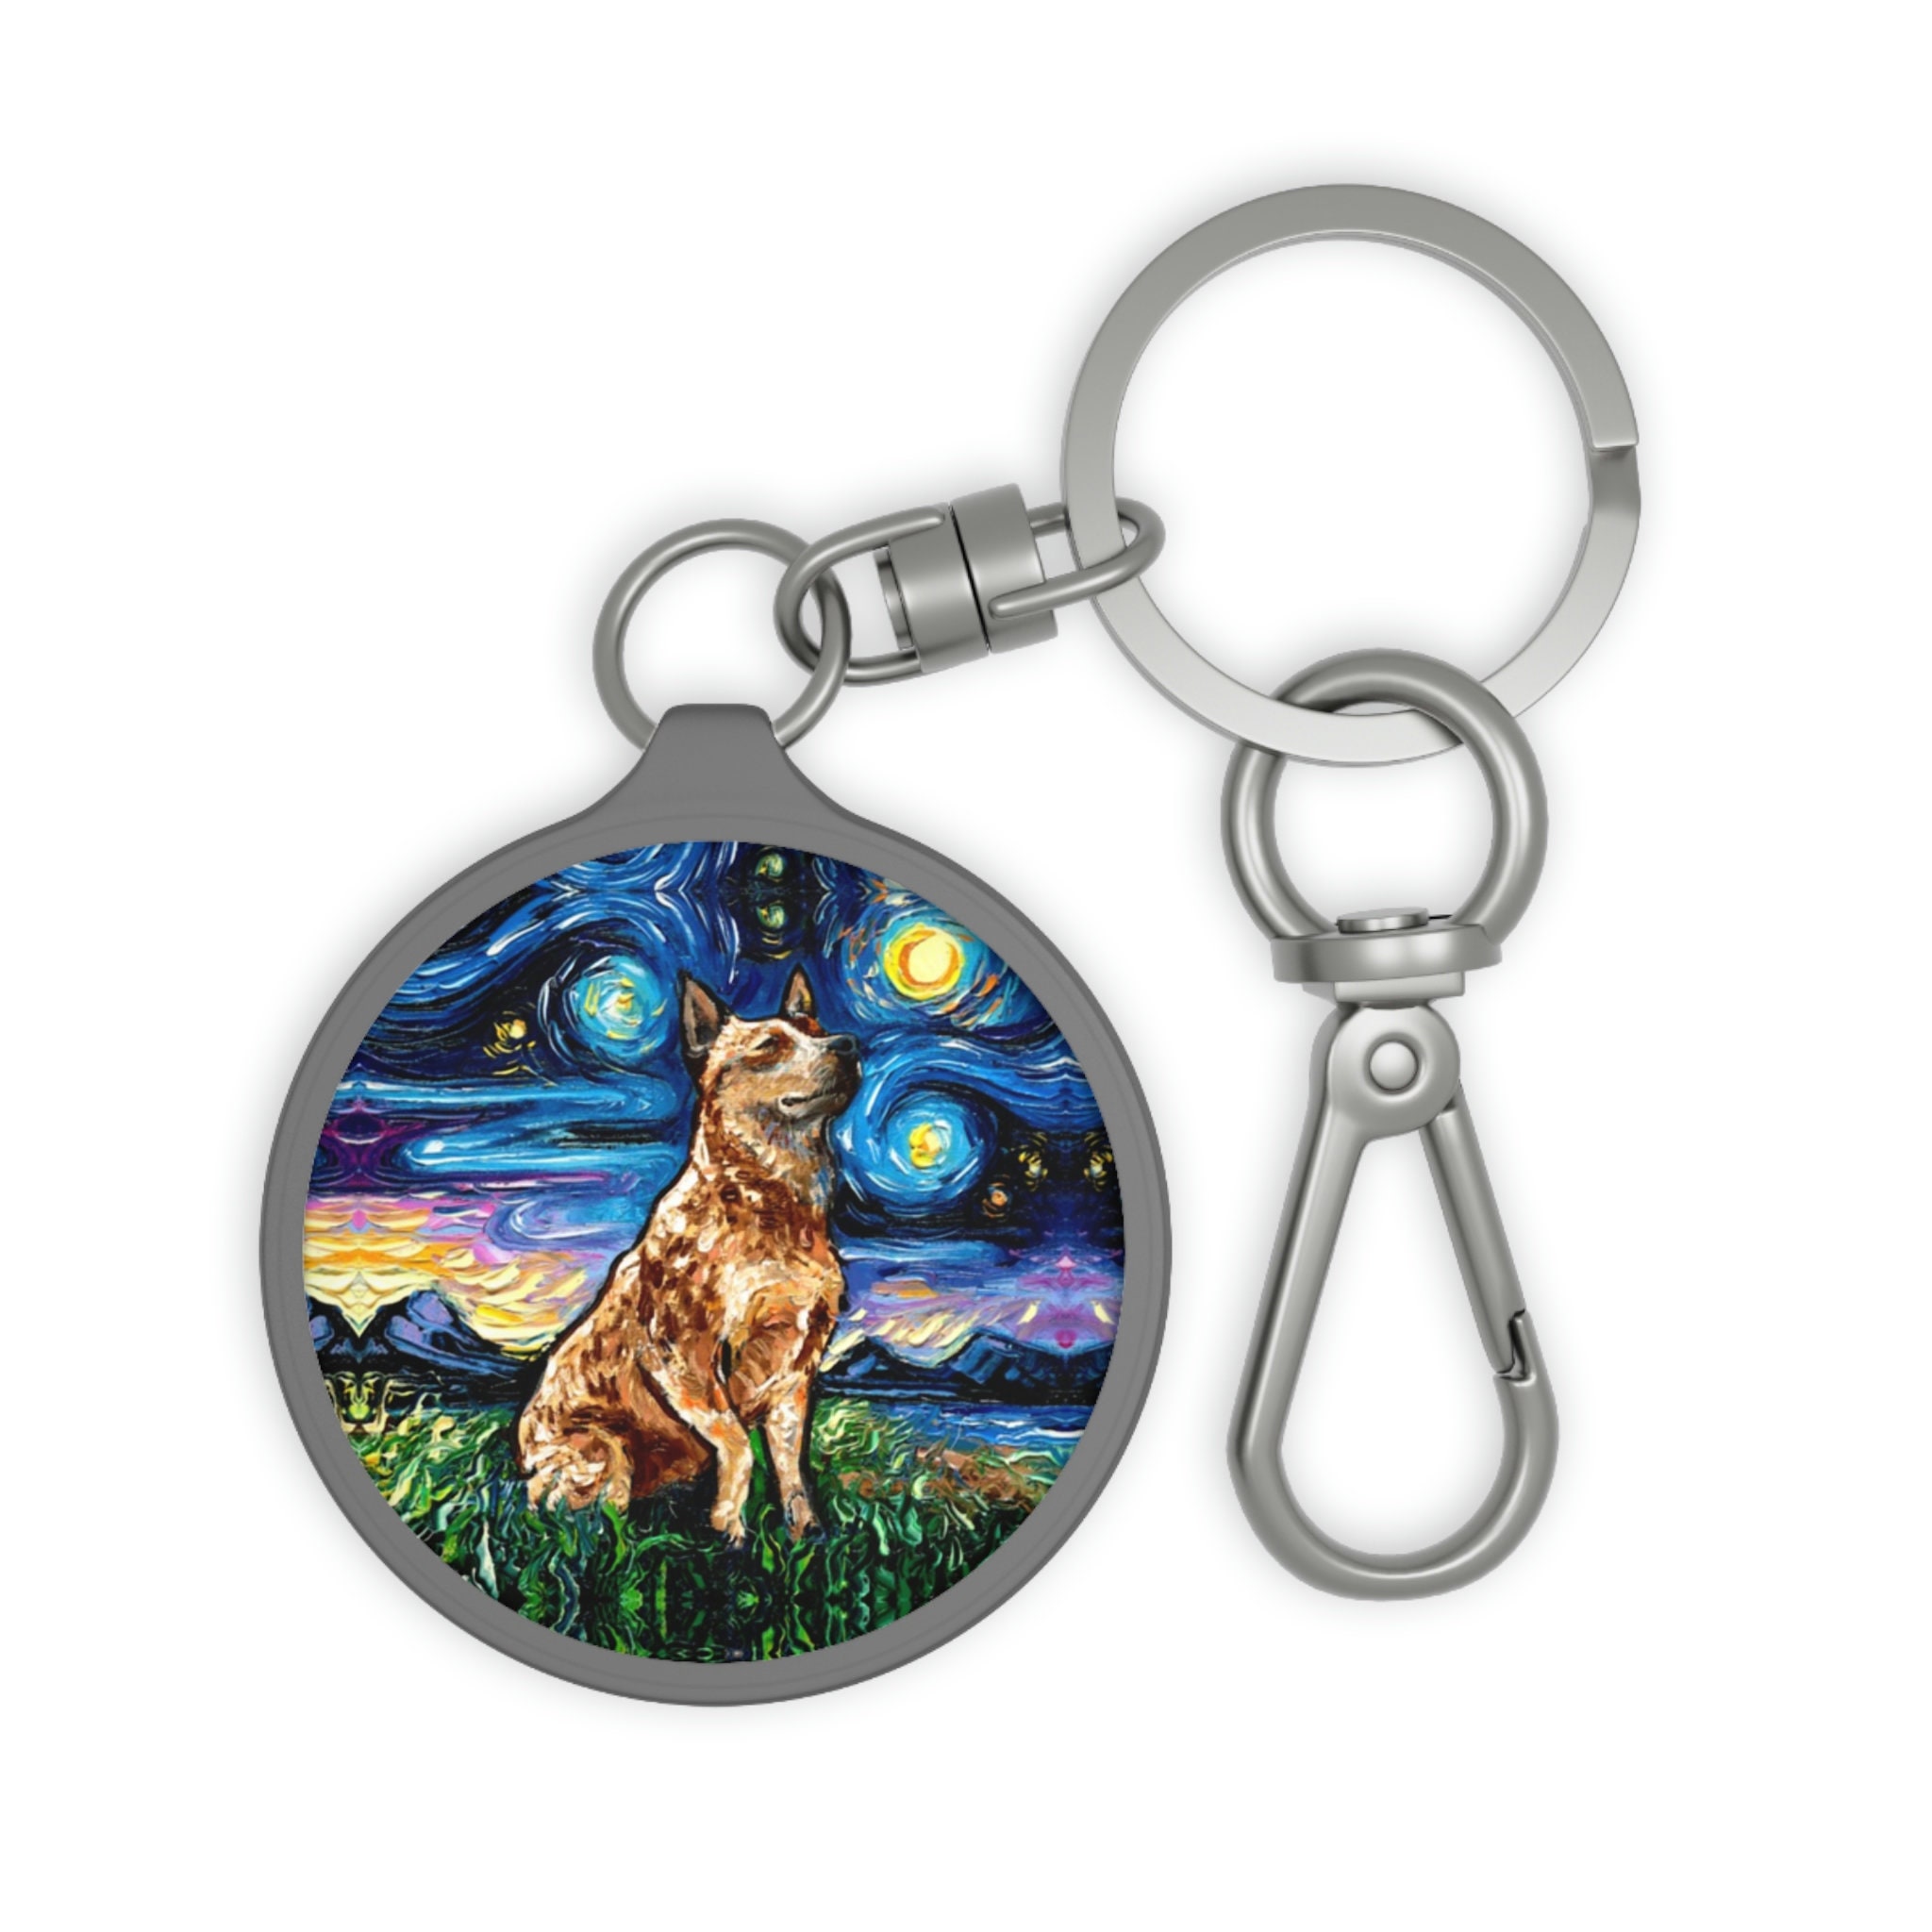 Blue Heeler dog keychain, Red heeler, Cattle dog key chain, pet keychain,  key chain, pet bag charm, heeler jewelry, dog jewellery, Christmas